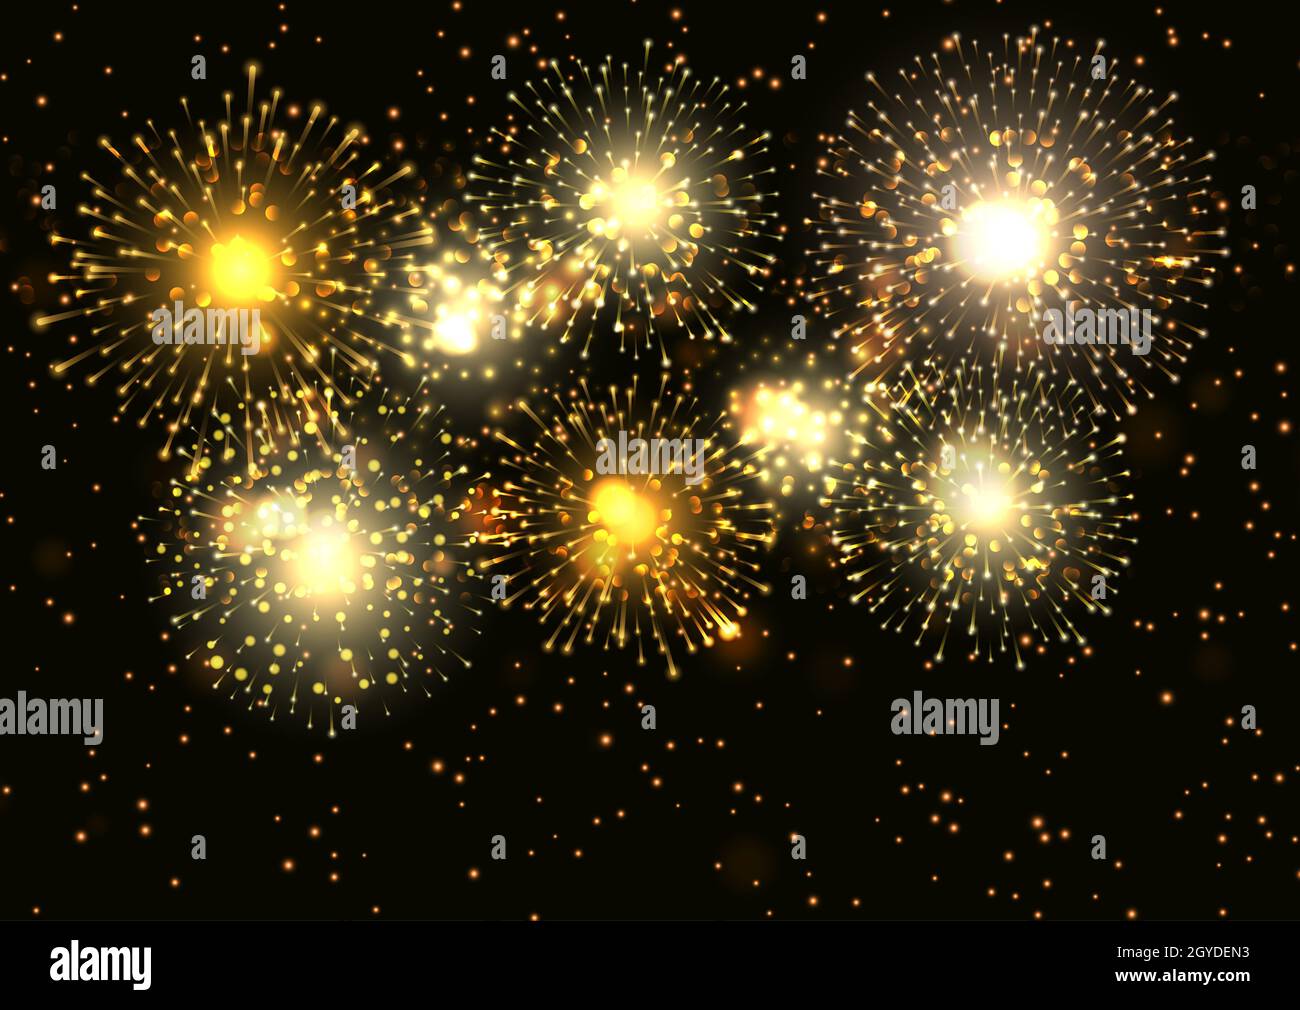 Celebration background with golden fireworks display Stock Photo